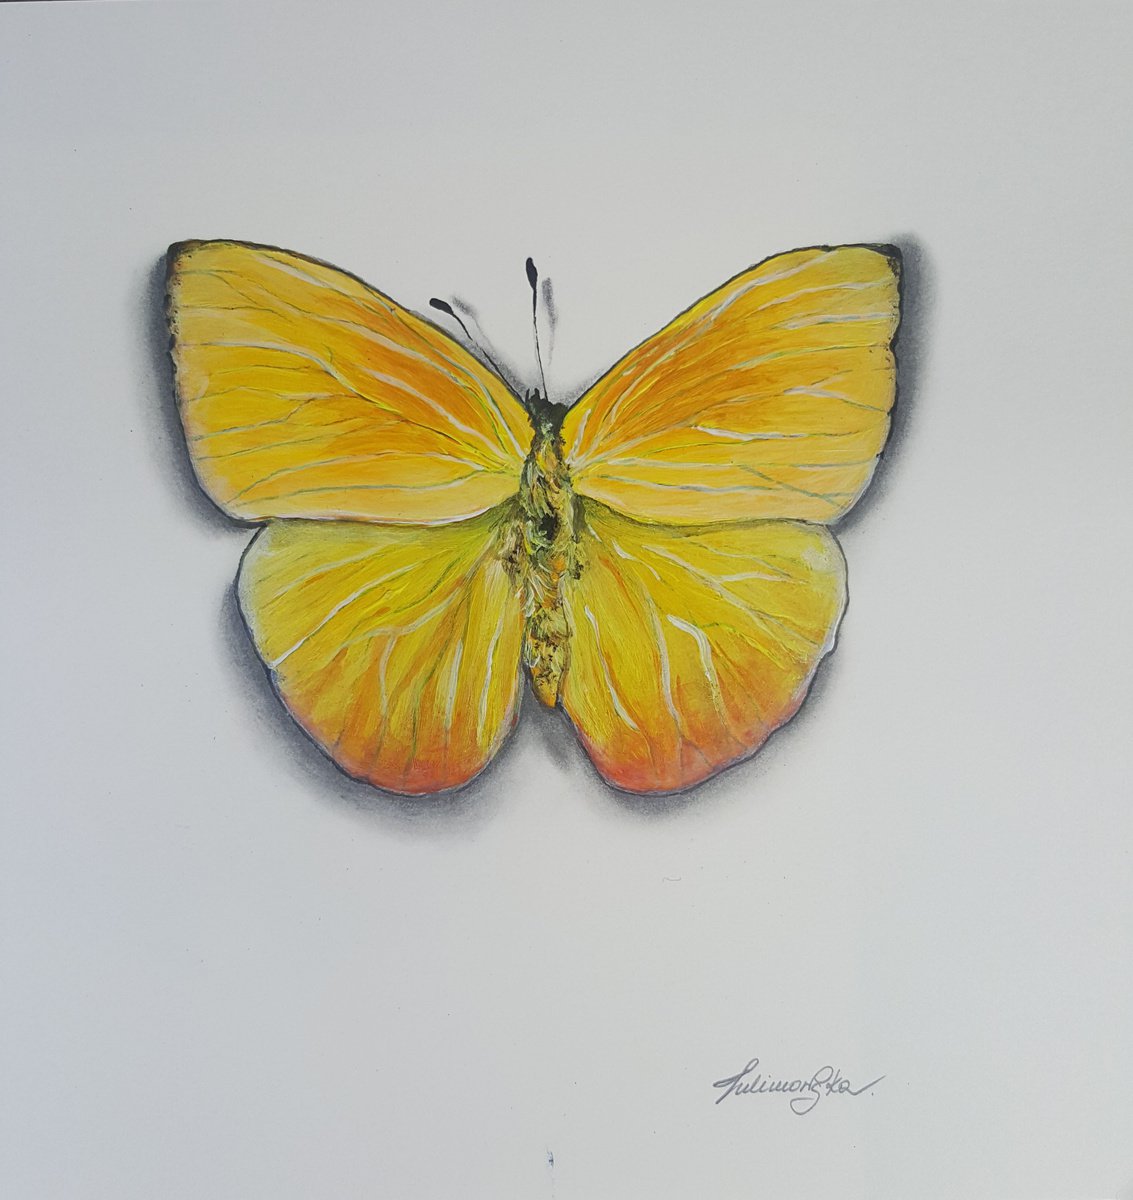 Butterfly Collection - Orange Barred Sulphur by Maja Tulimowska - Chmielewska